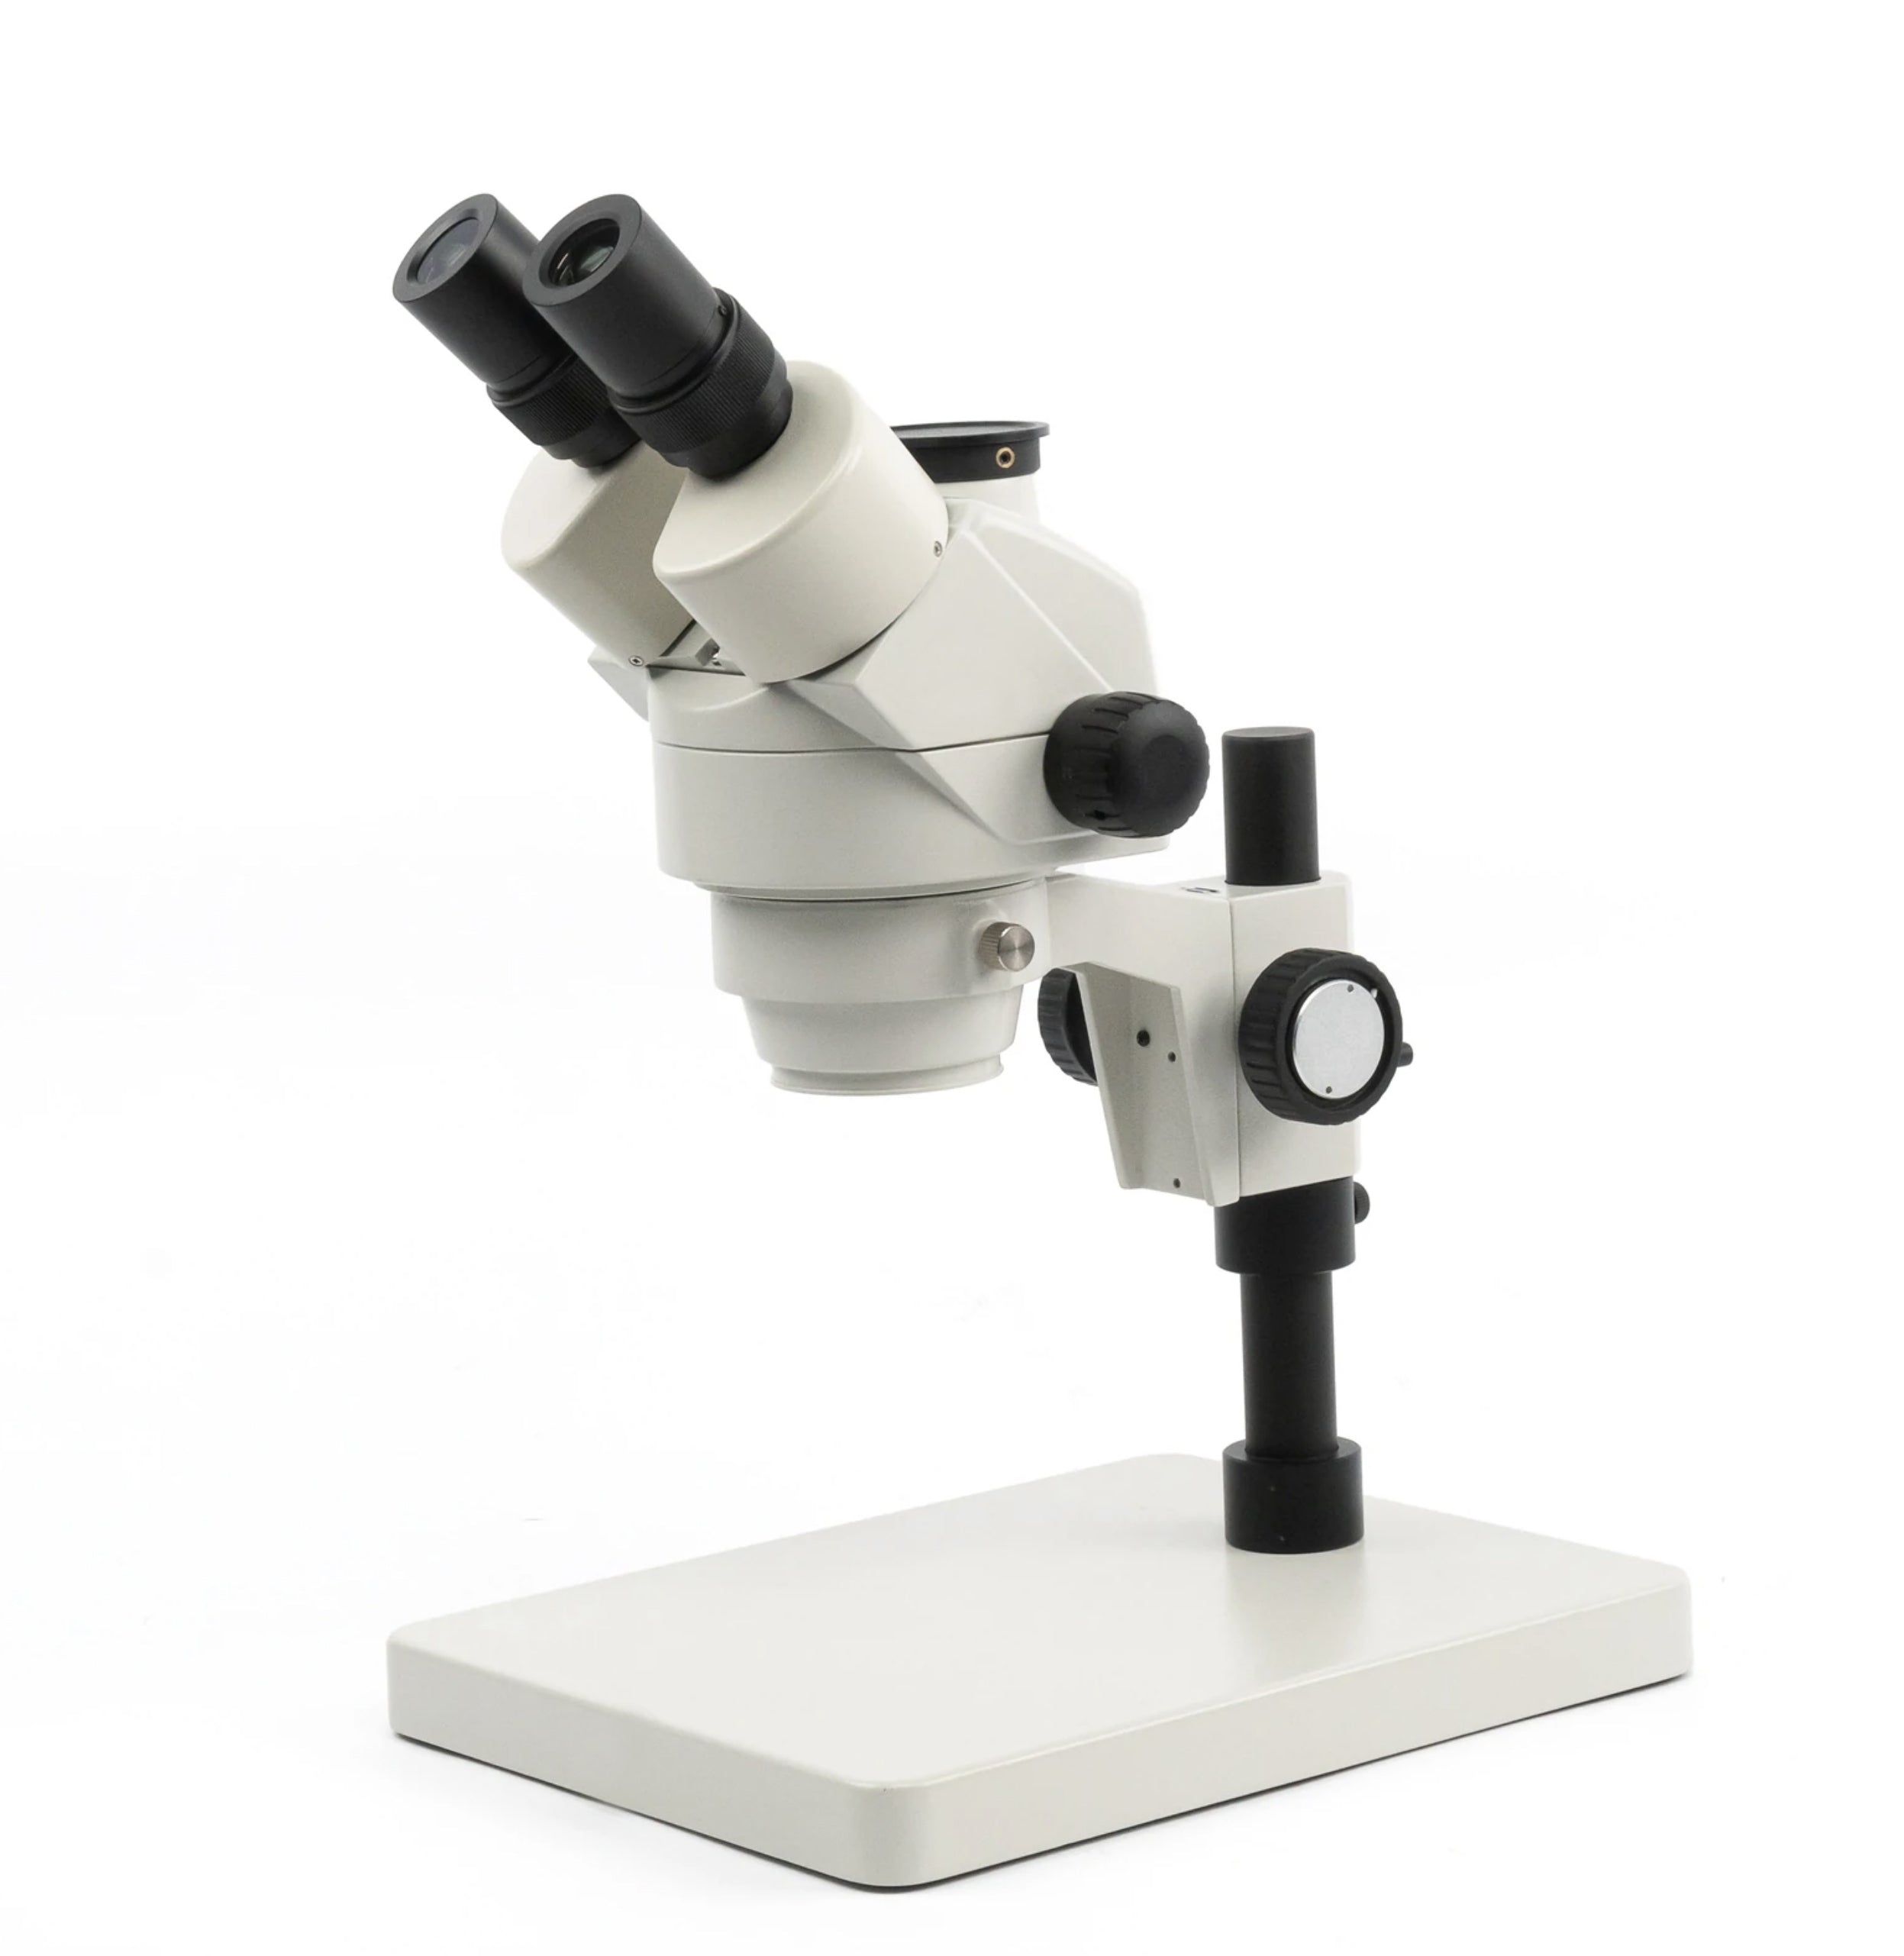 Zoom Trinocular Stereo Microscope (0.75X-4.5X) - 440T-440